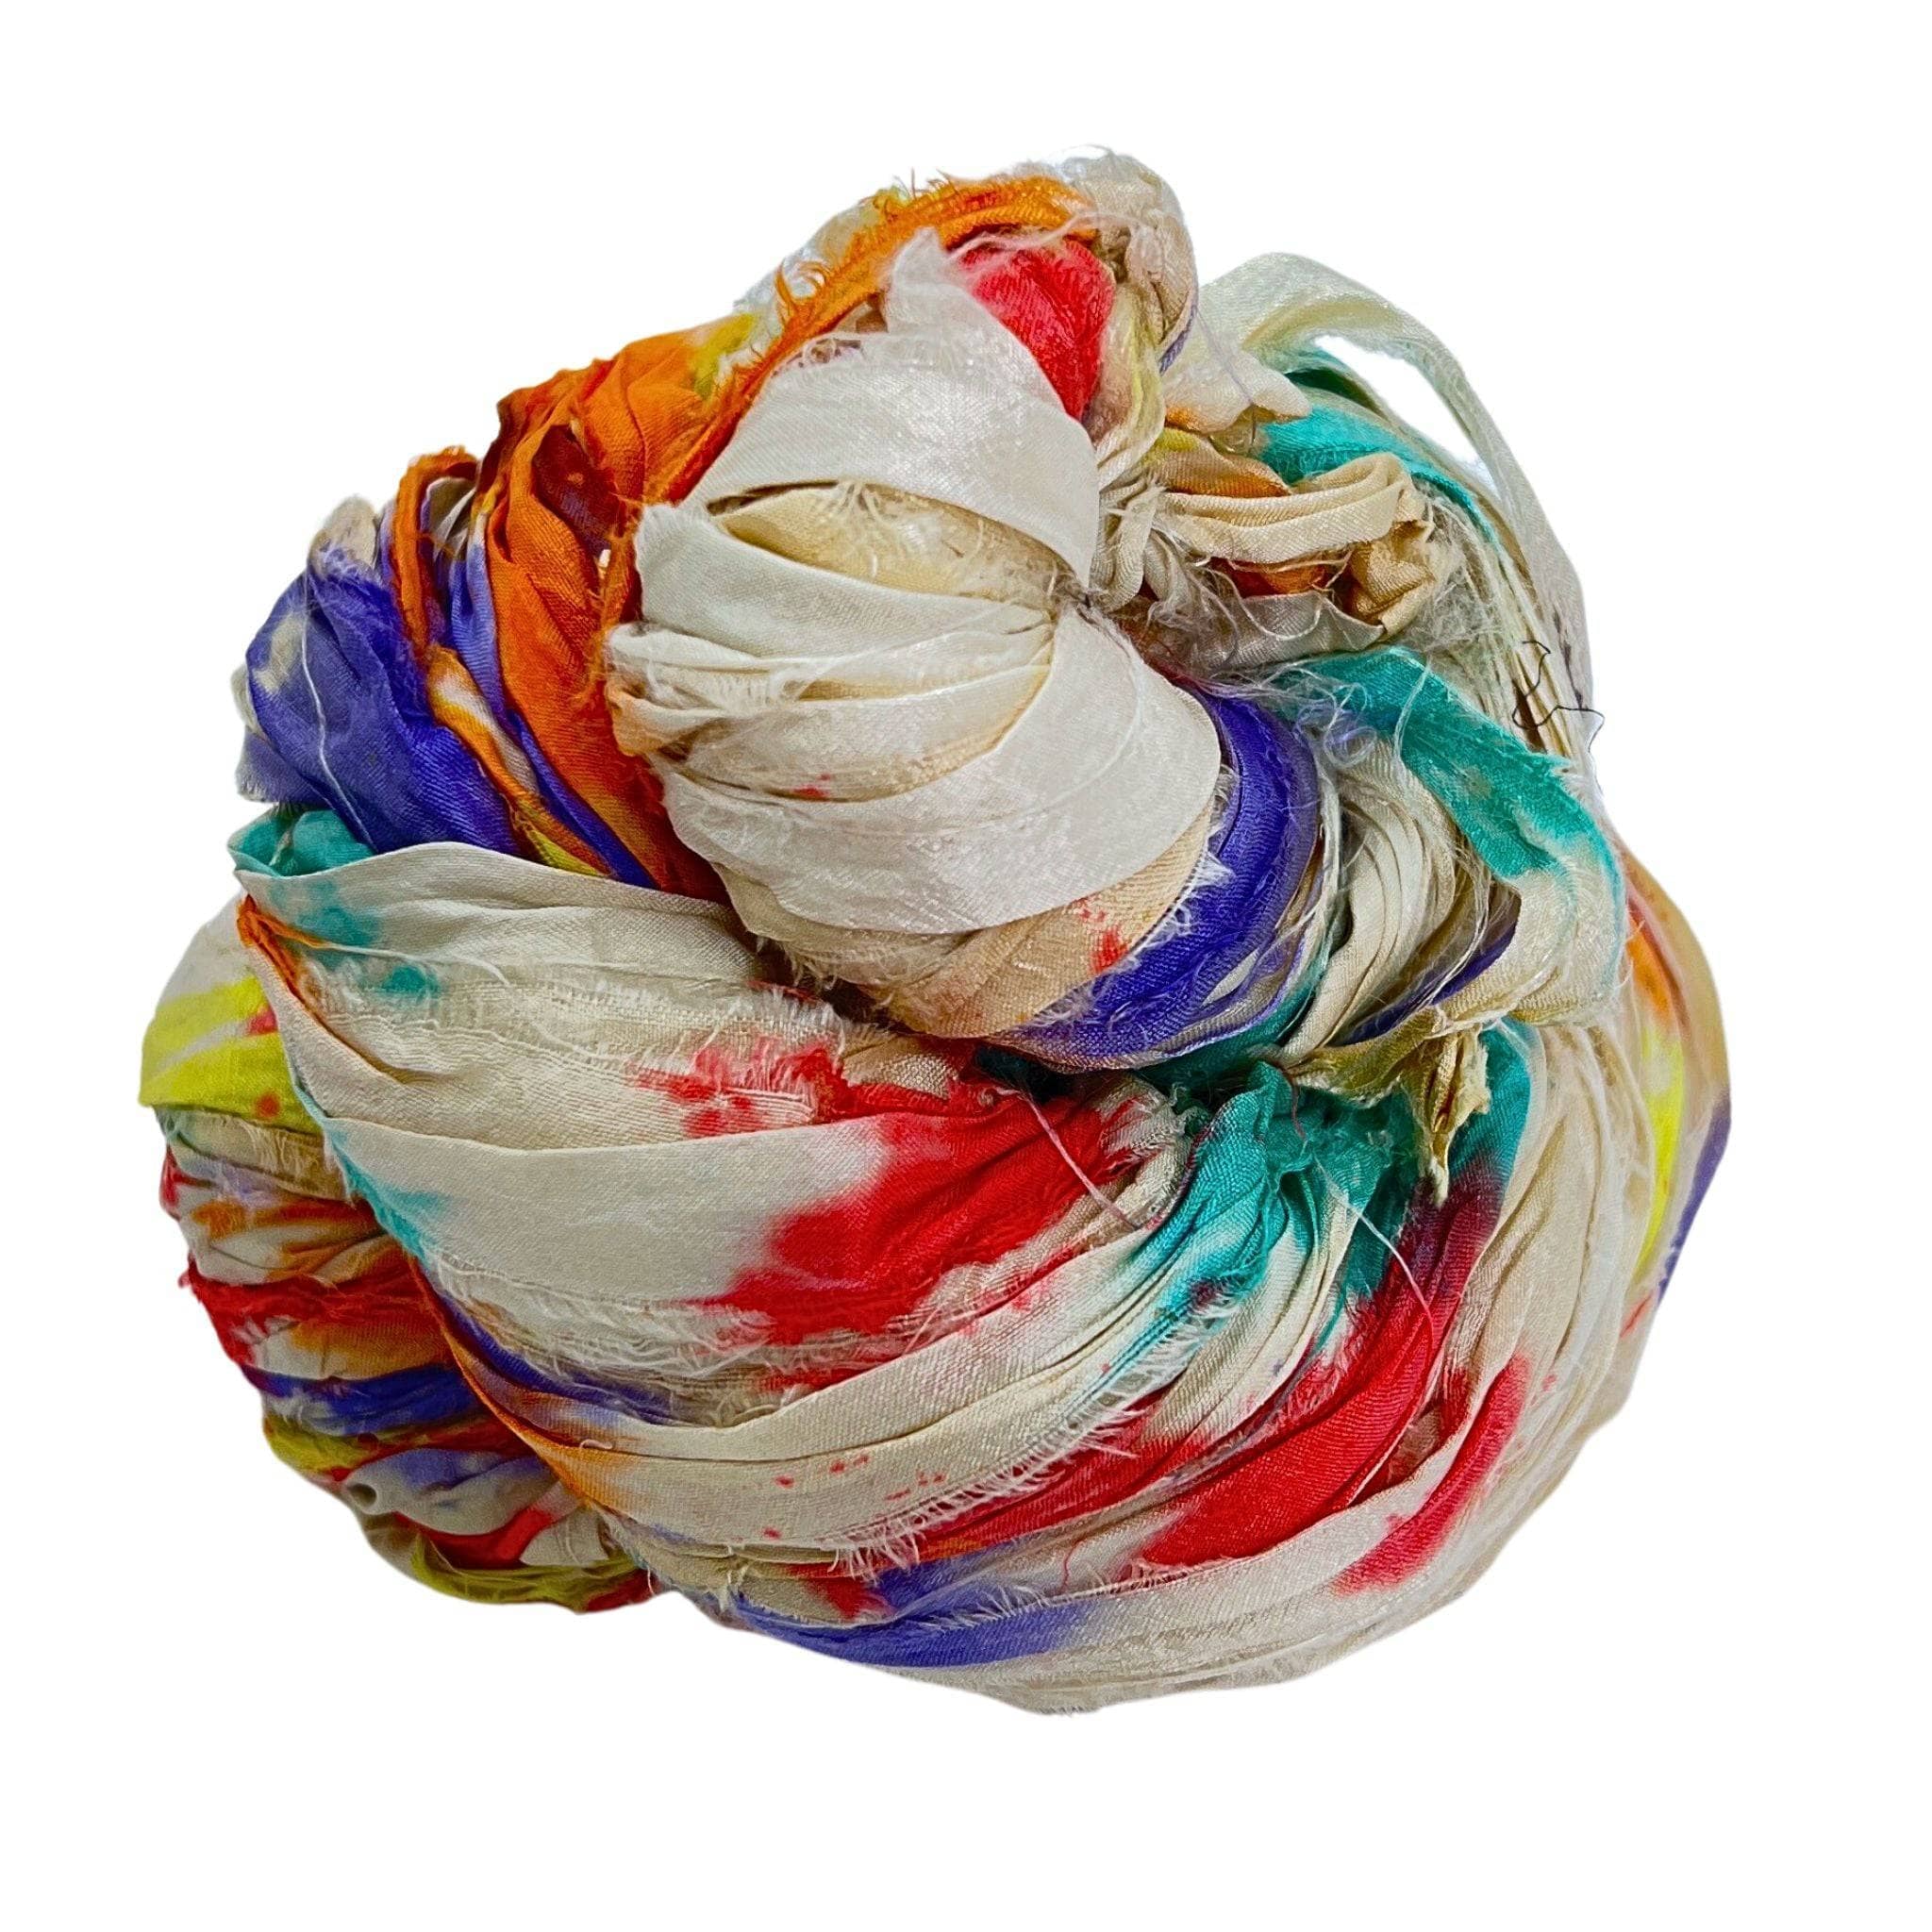 DARN GOOD YARN Recycled Sari Silk Ribbon Yarn Vintage Ivory Off-White  Dyeable 100 Grams 50 Yards 1 Skein Handmade one of a Kind